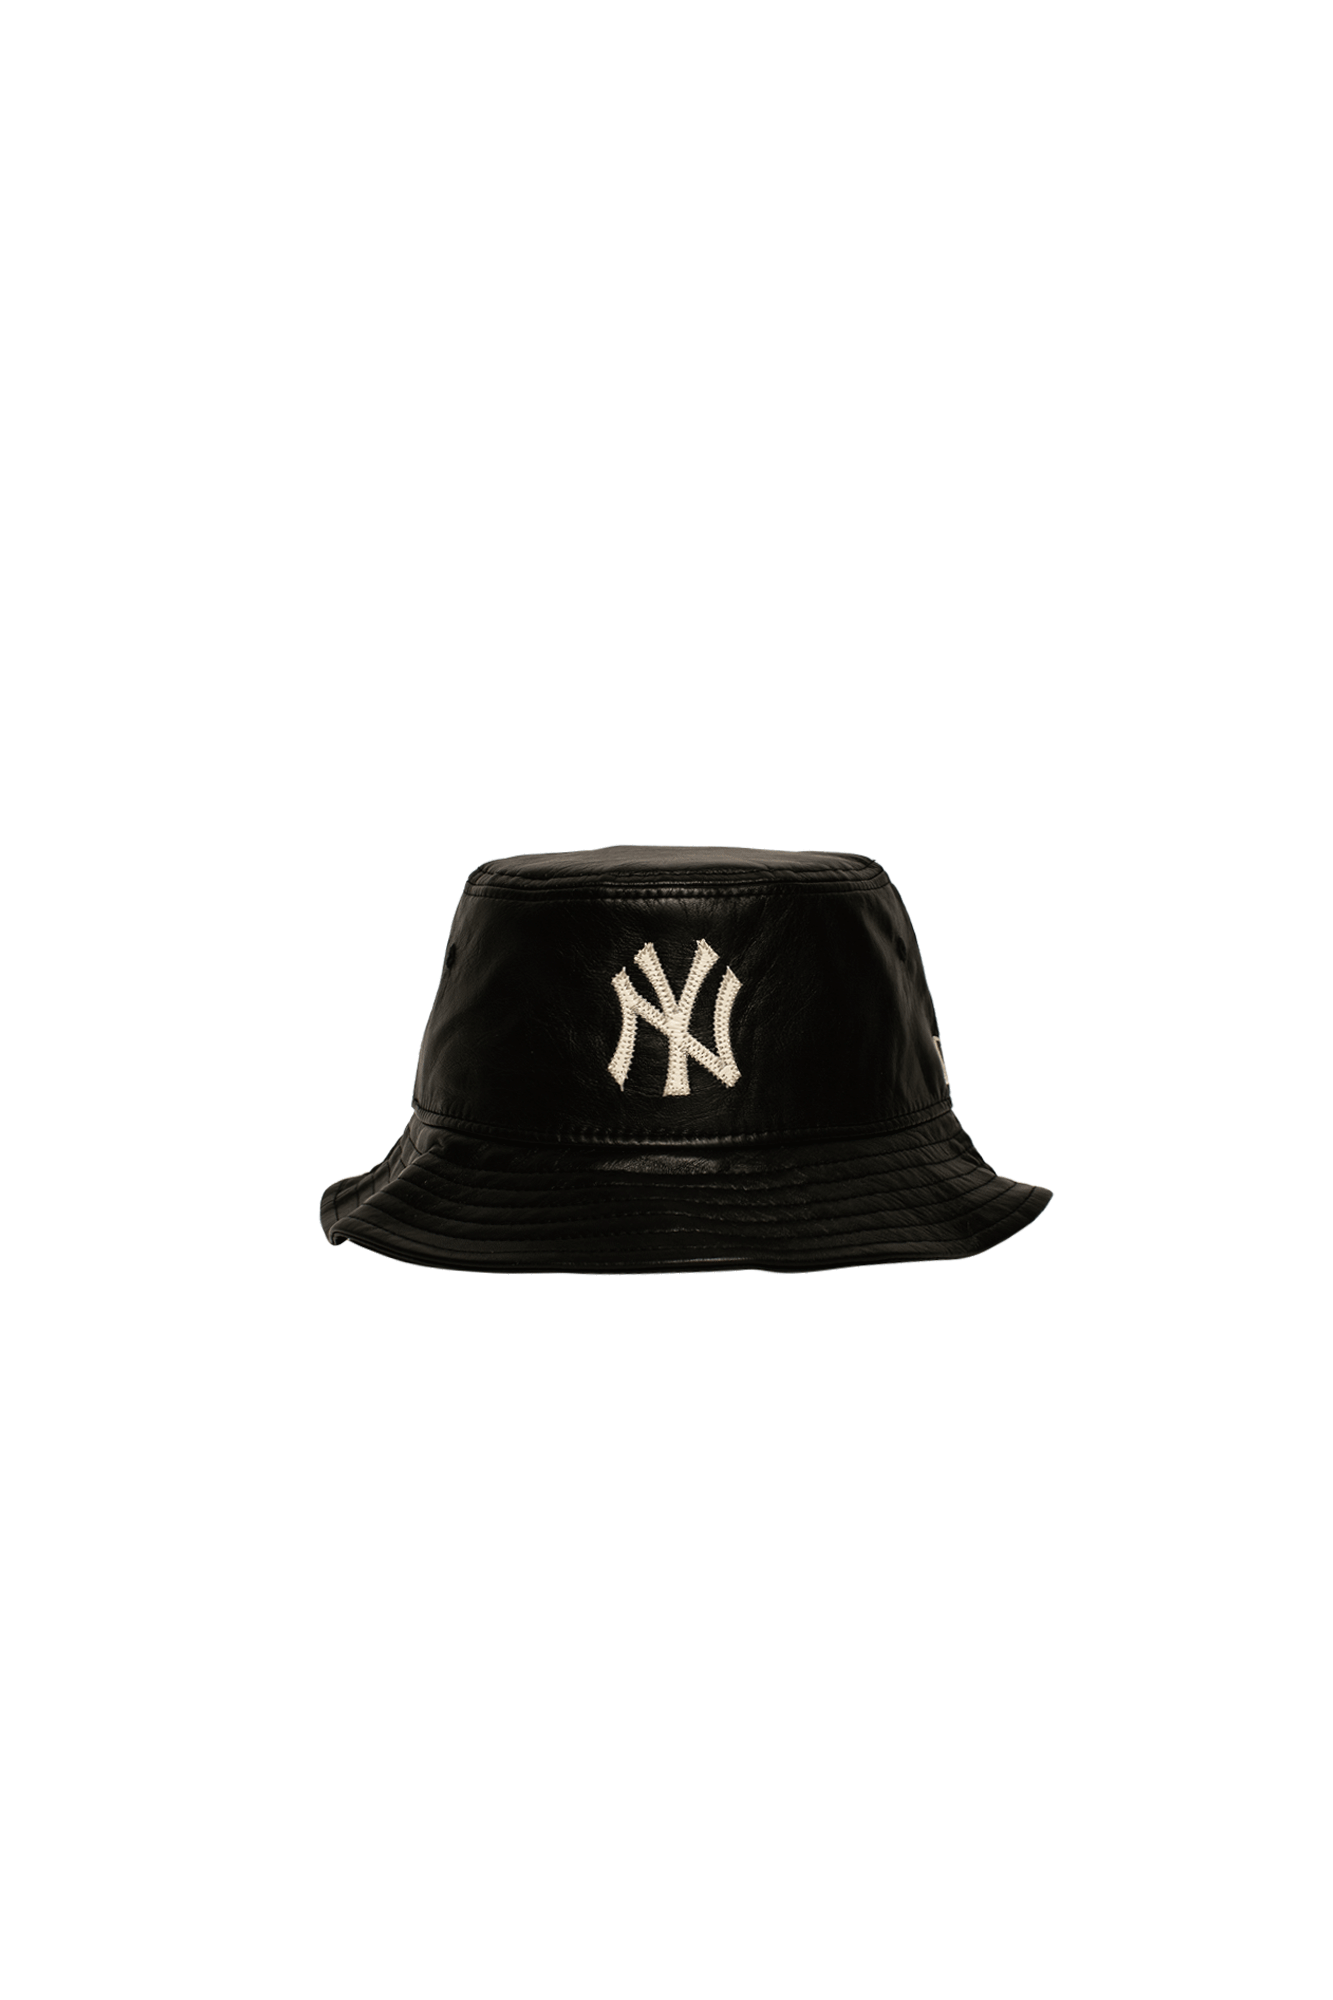 New York Yankees Leather Bucket Hat